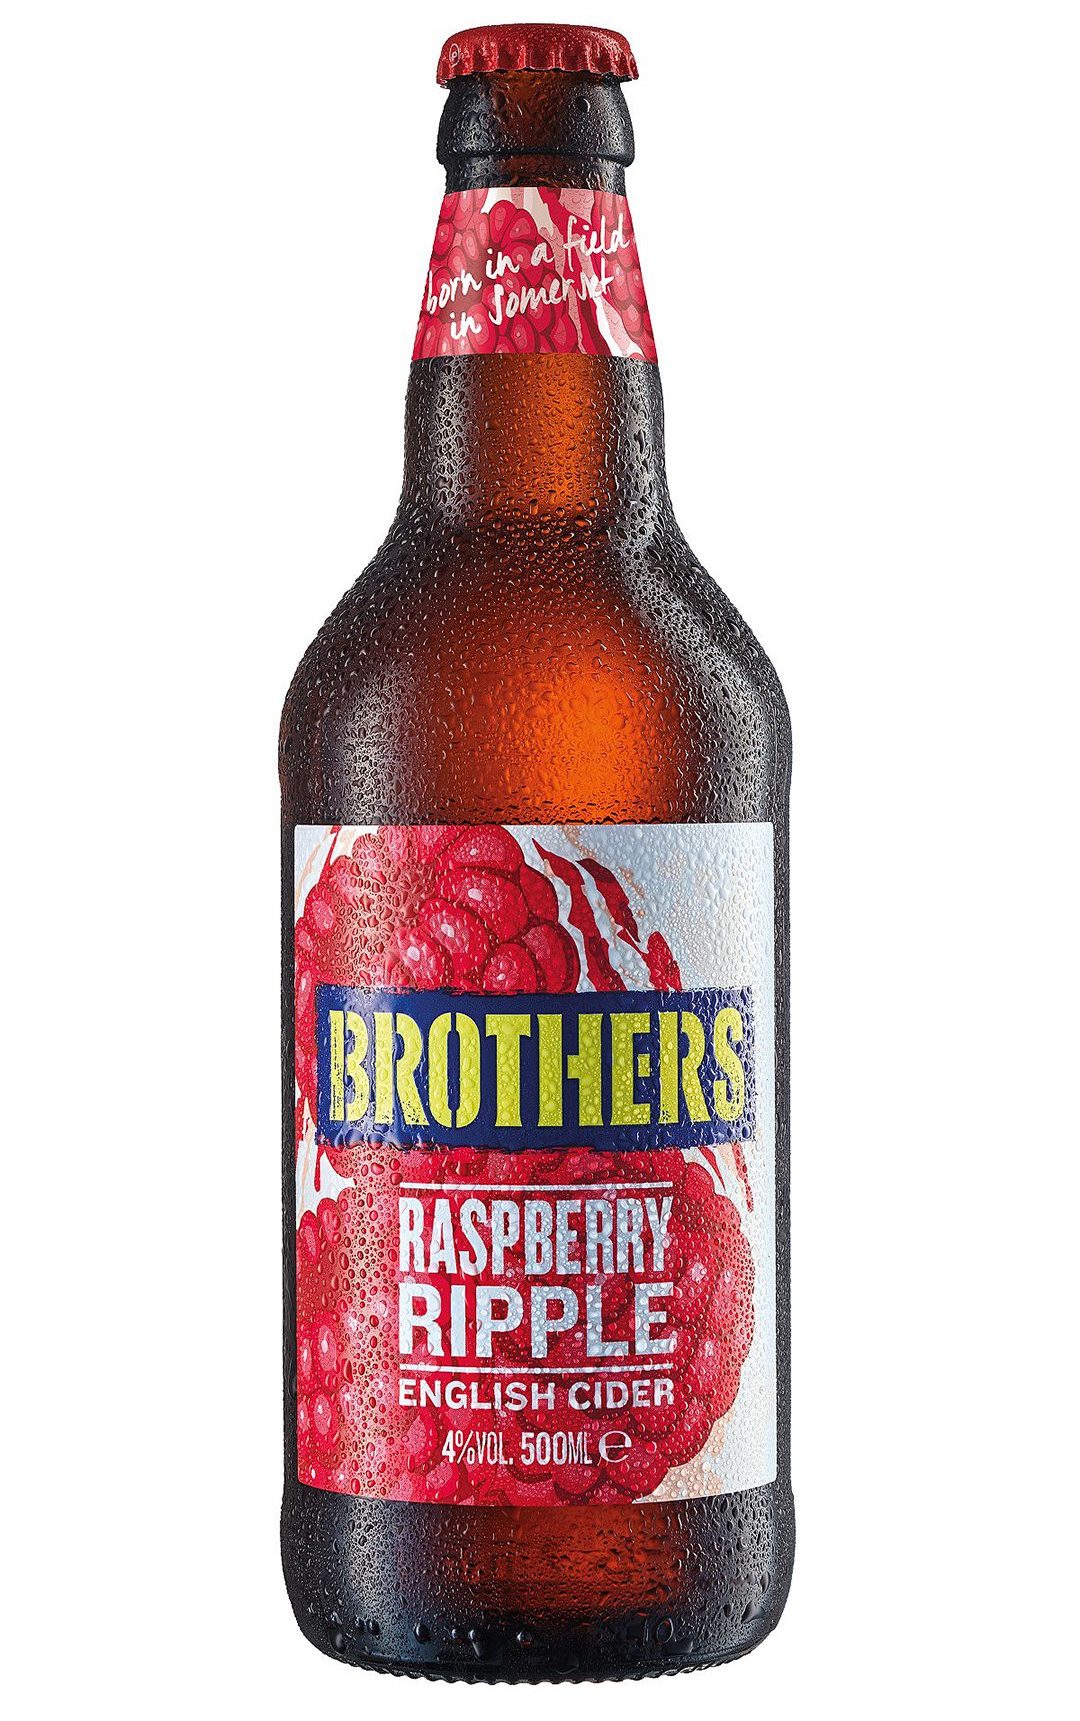 Brothers Raspberry Ripple English Cider.